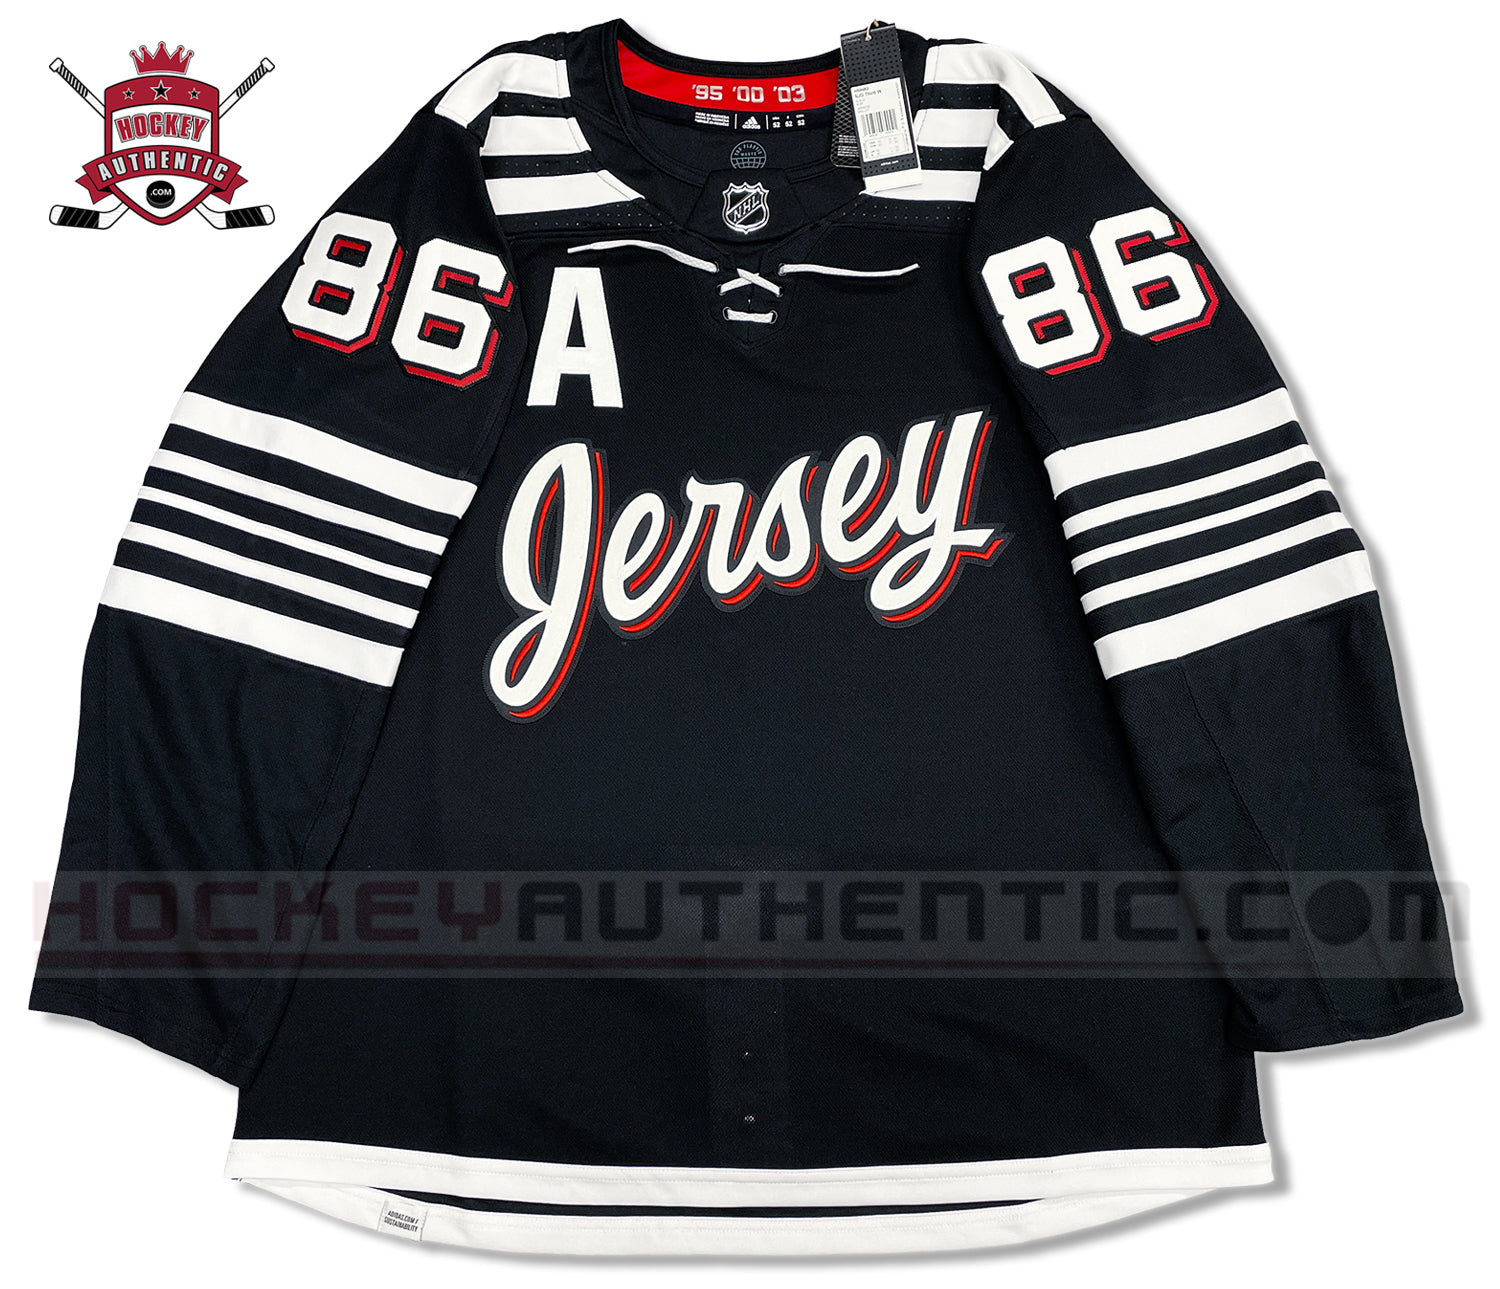 NEW*Jack Hughes Reverse Retro NJ Devils NHL Jersey Size XL 54